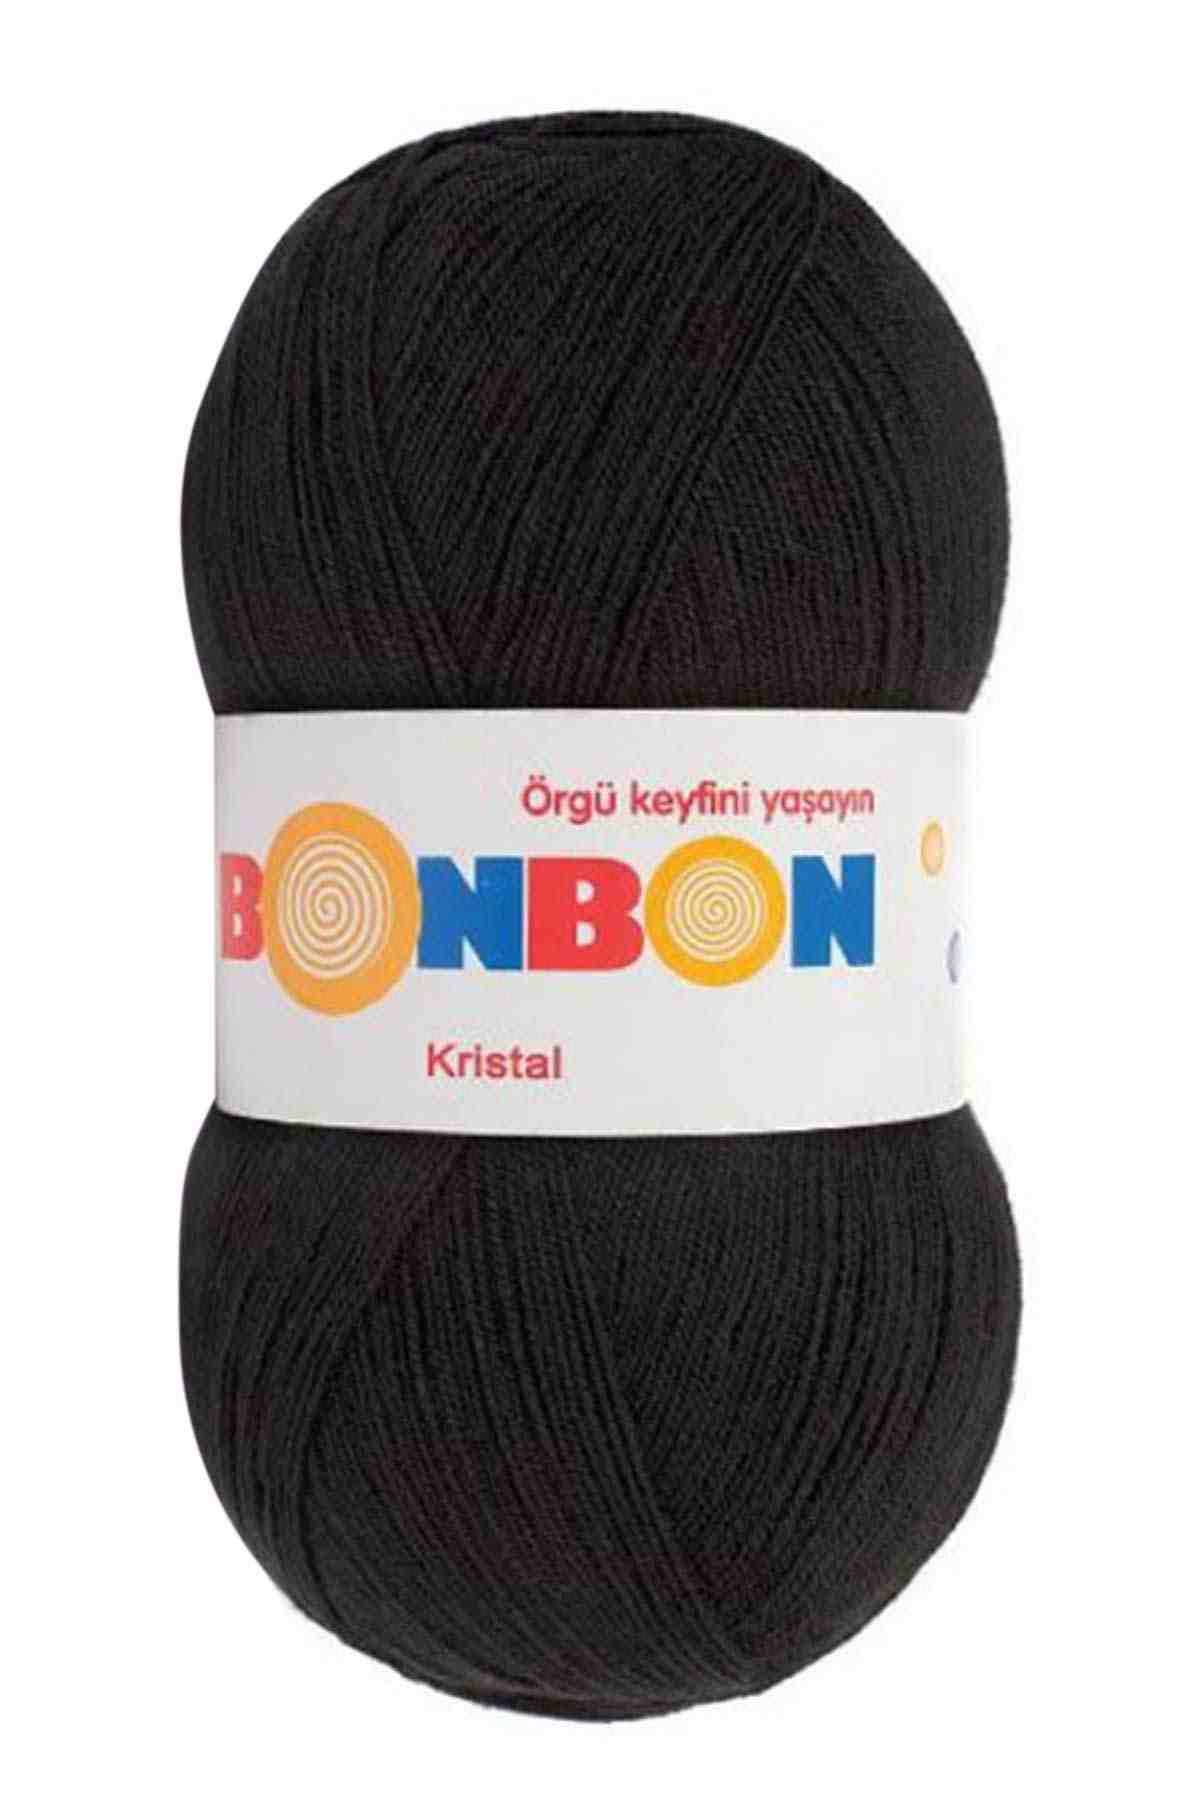 Nako Bonbon Kristal Acrylic Yarn